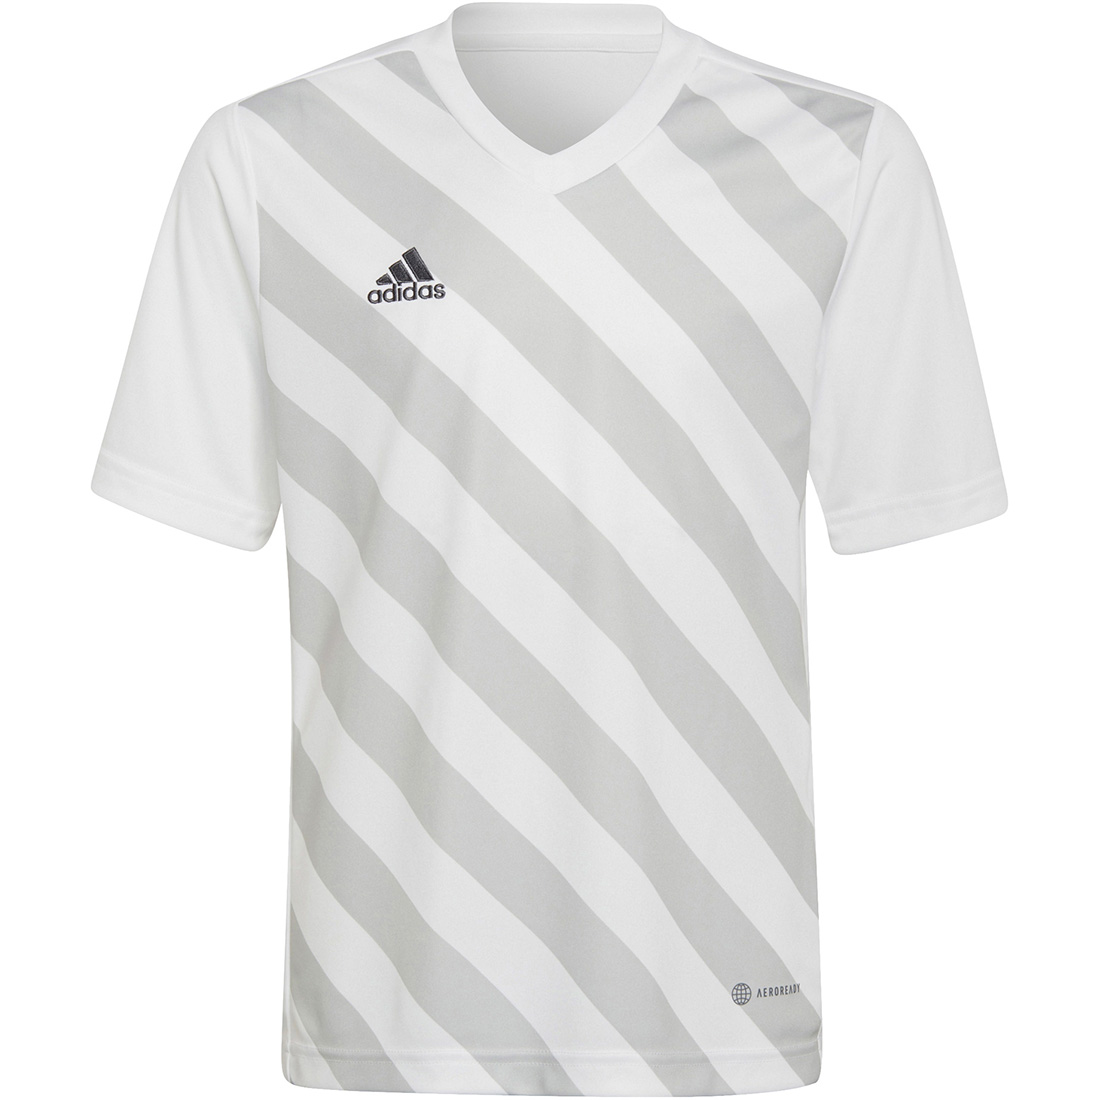 Entrada Kinder weiß-grau GFX 22 online Trikot Adidas kaufen